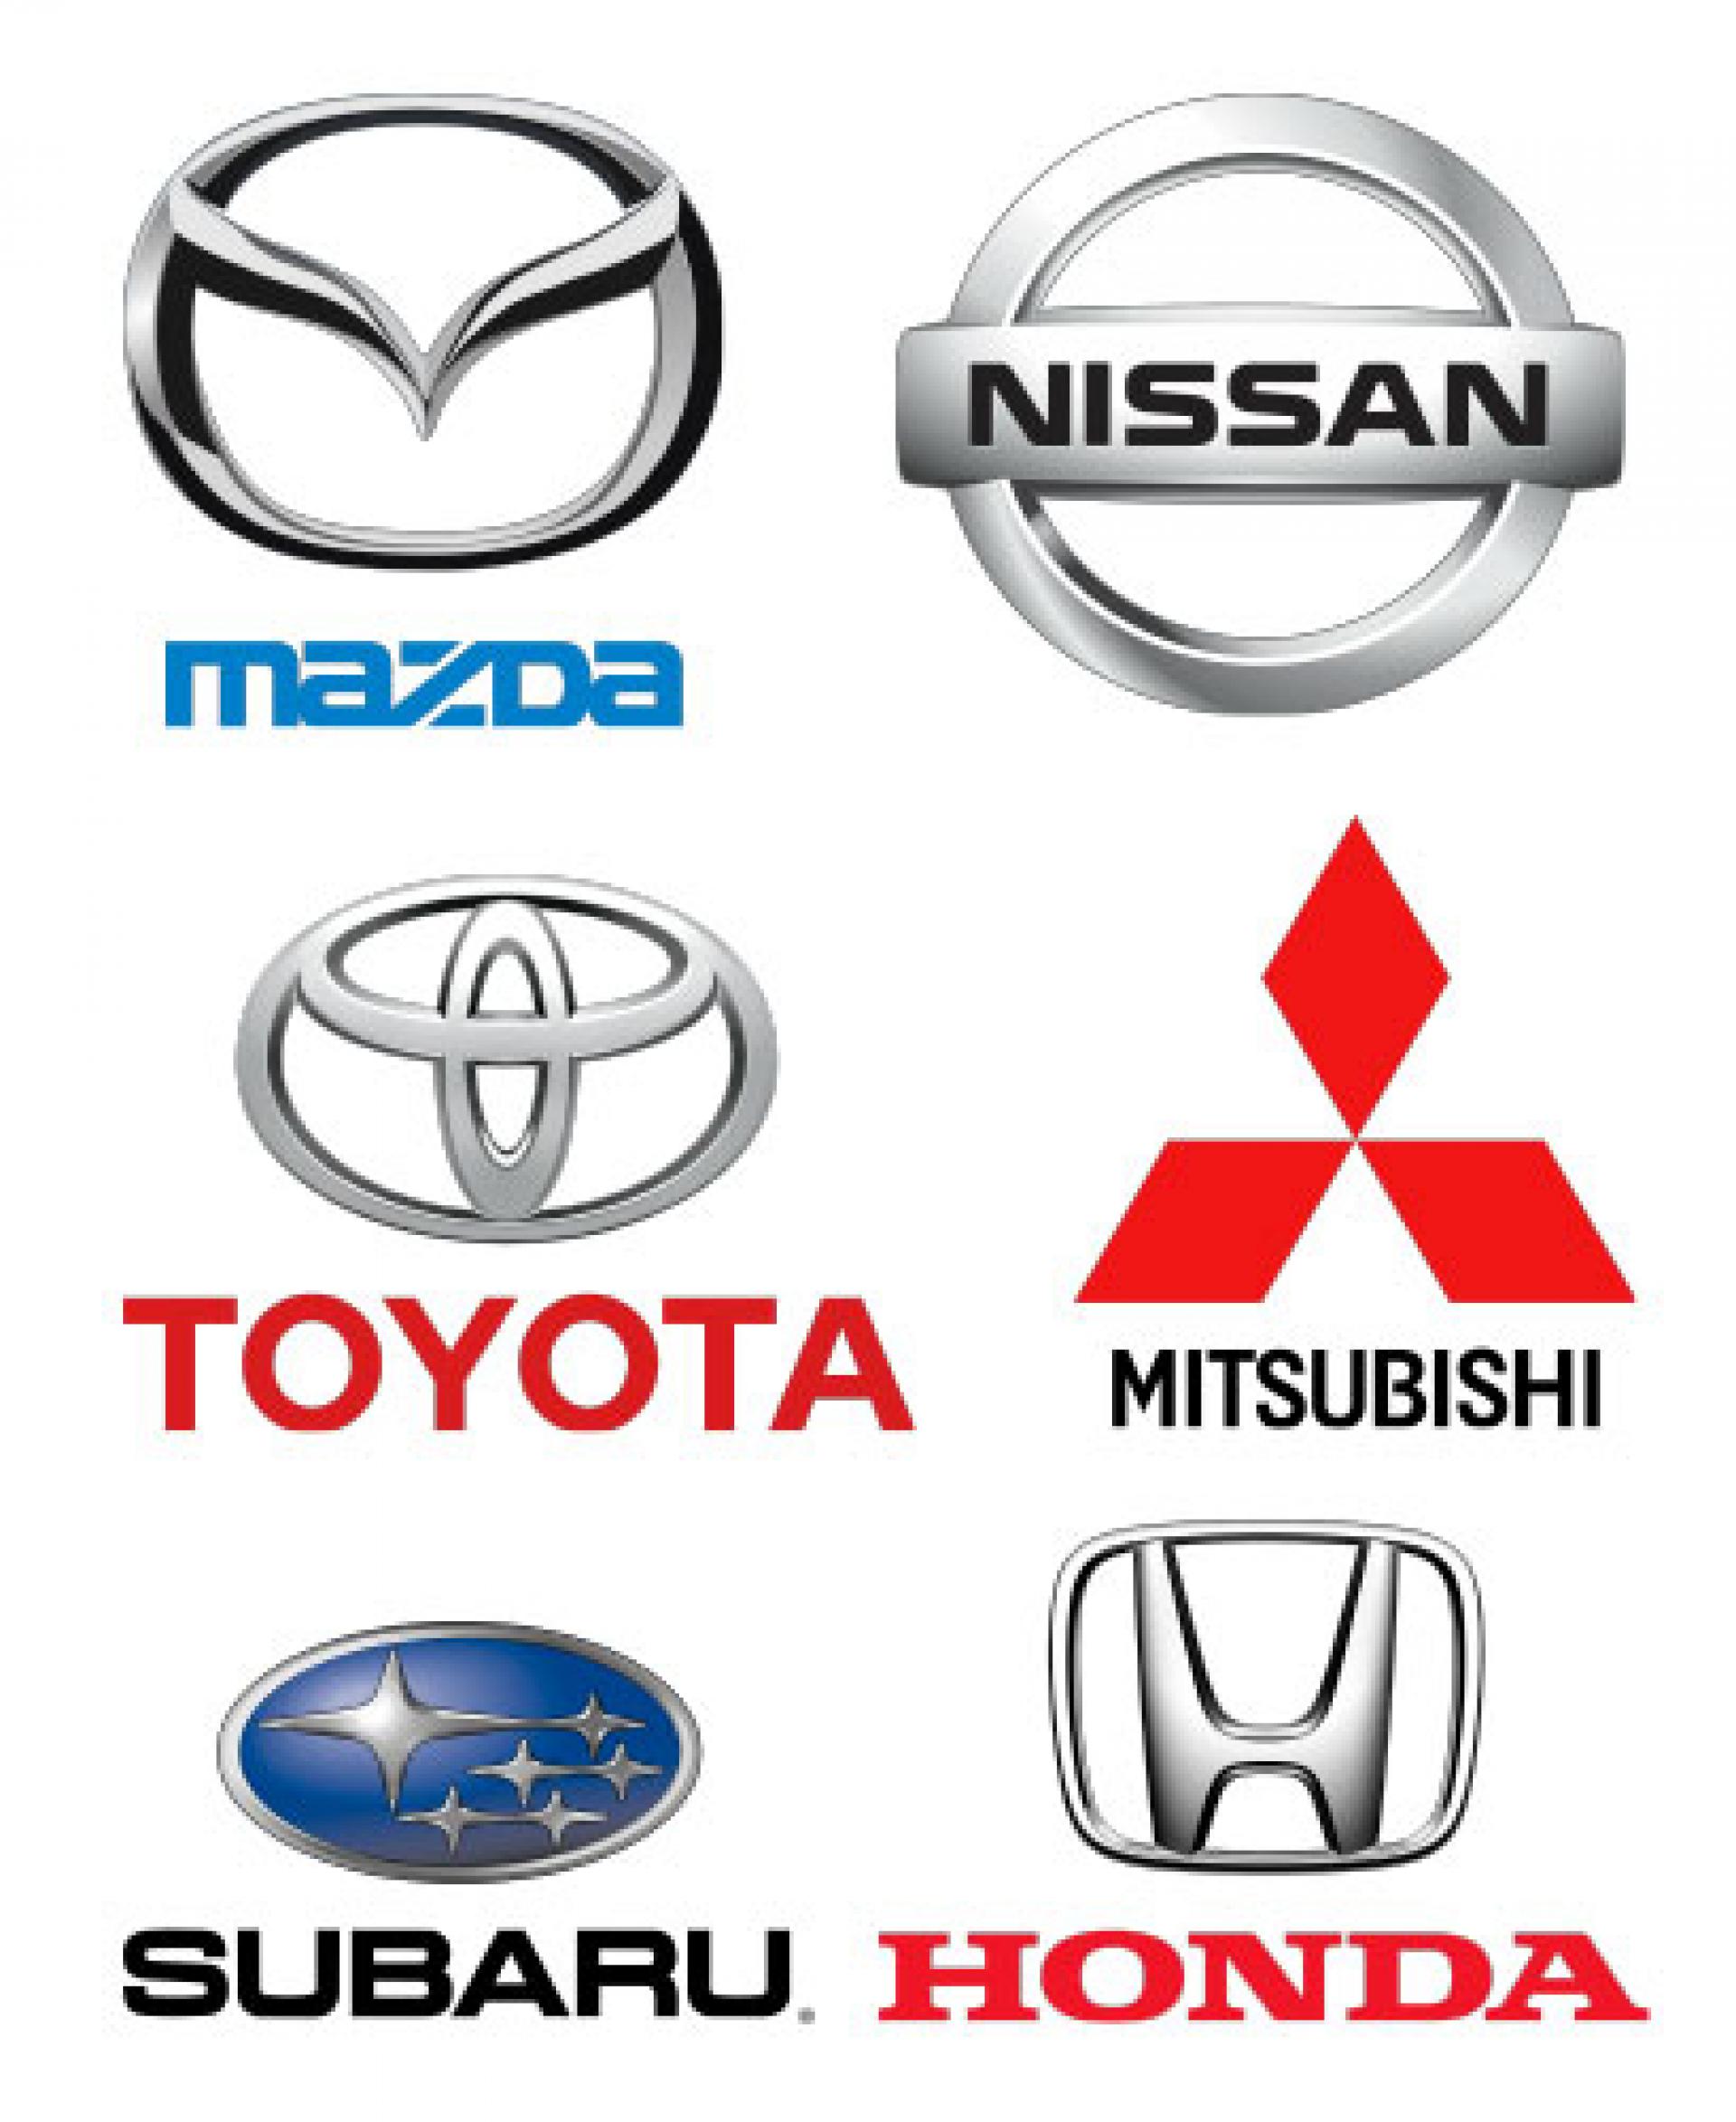 japanese car companies logos